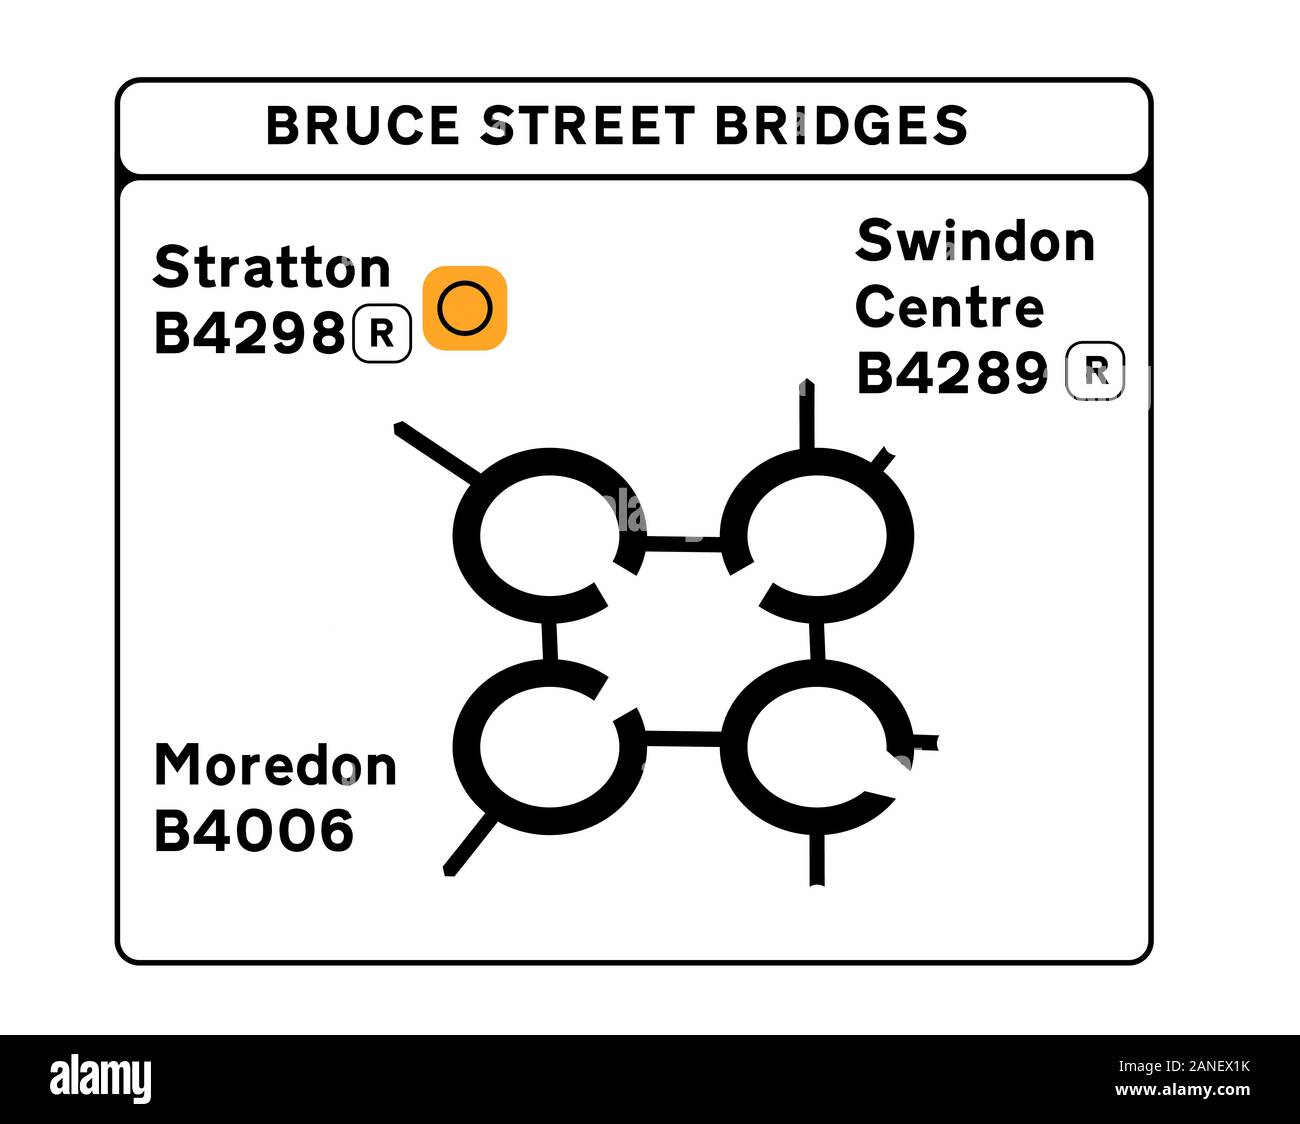 Bruce Street bridges roundabout road sign Stock Photo